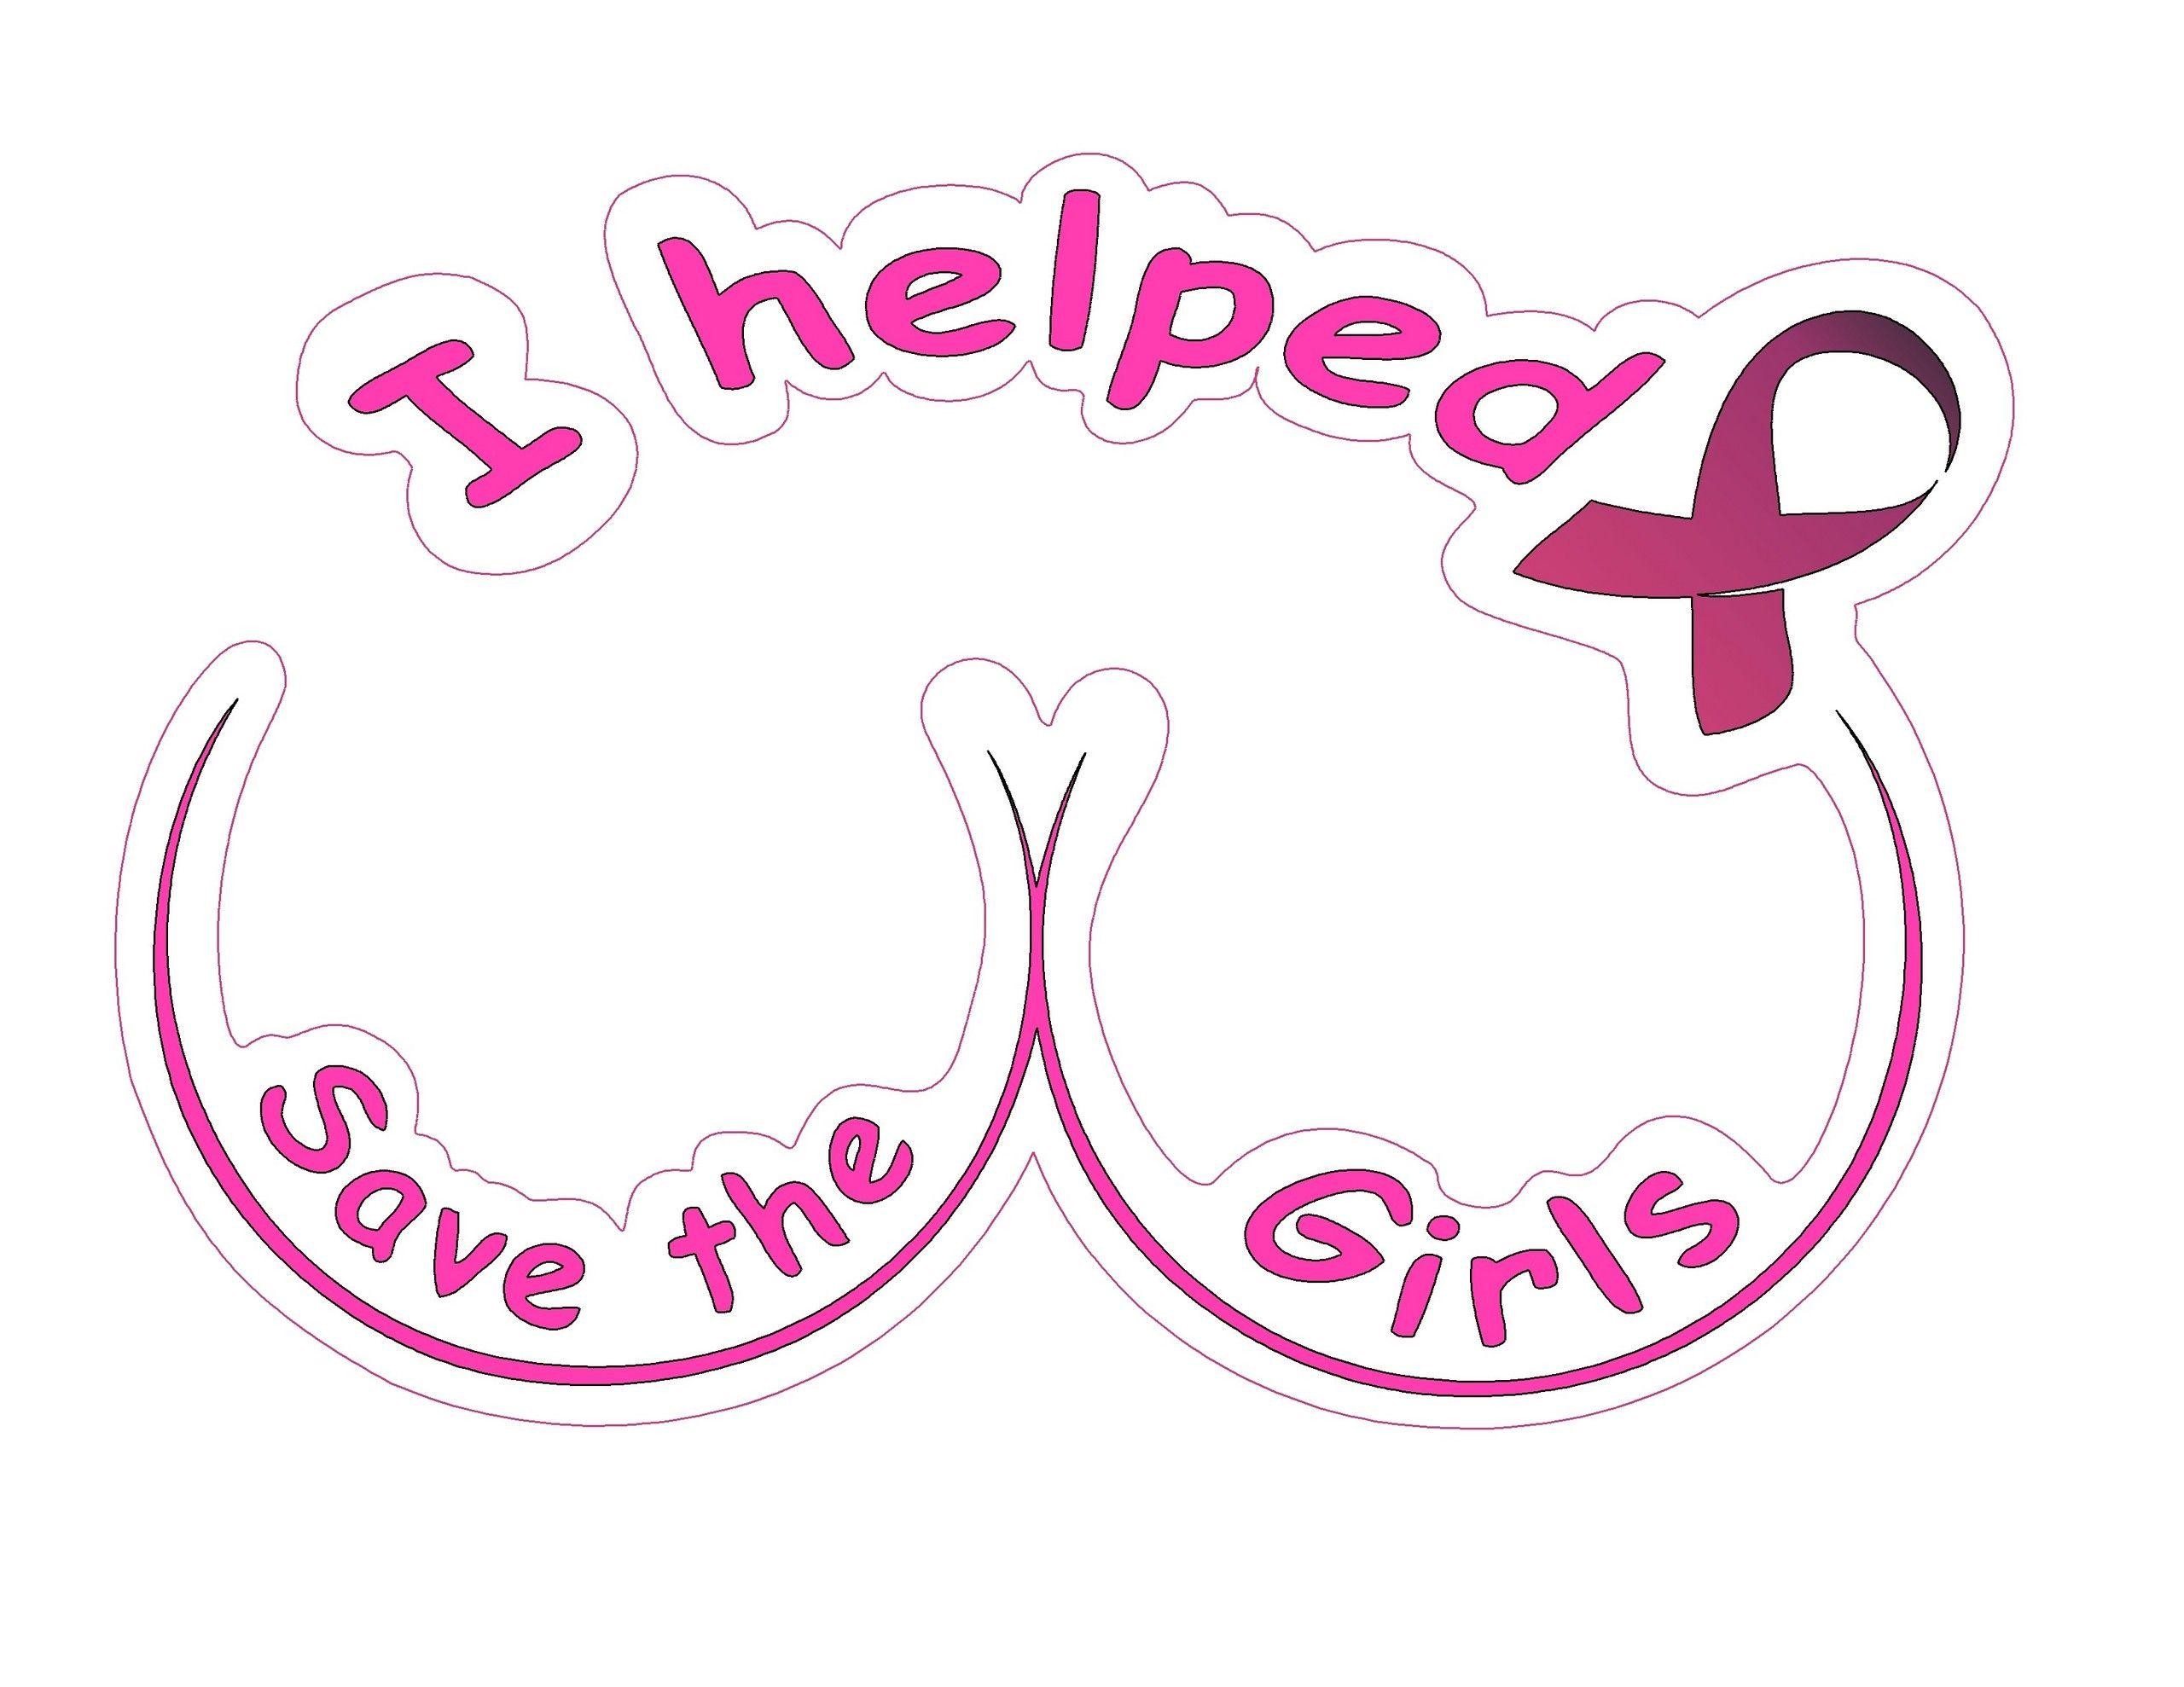 breastcancerawarenesswallpaperforfacebook  pinkribbon